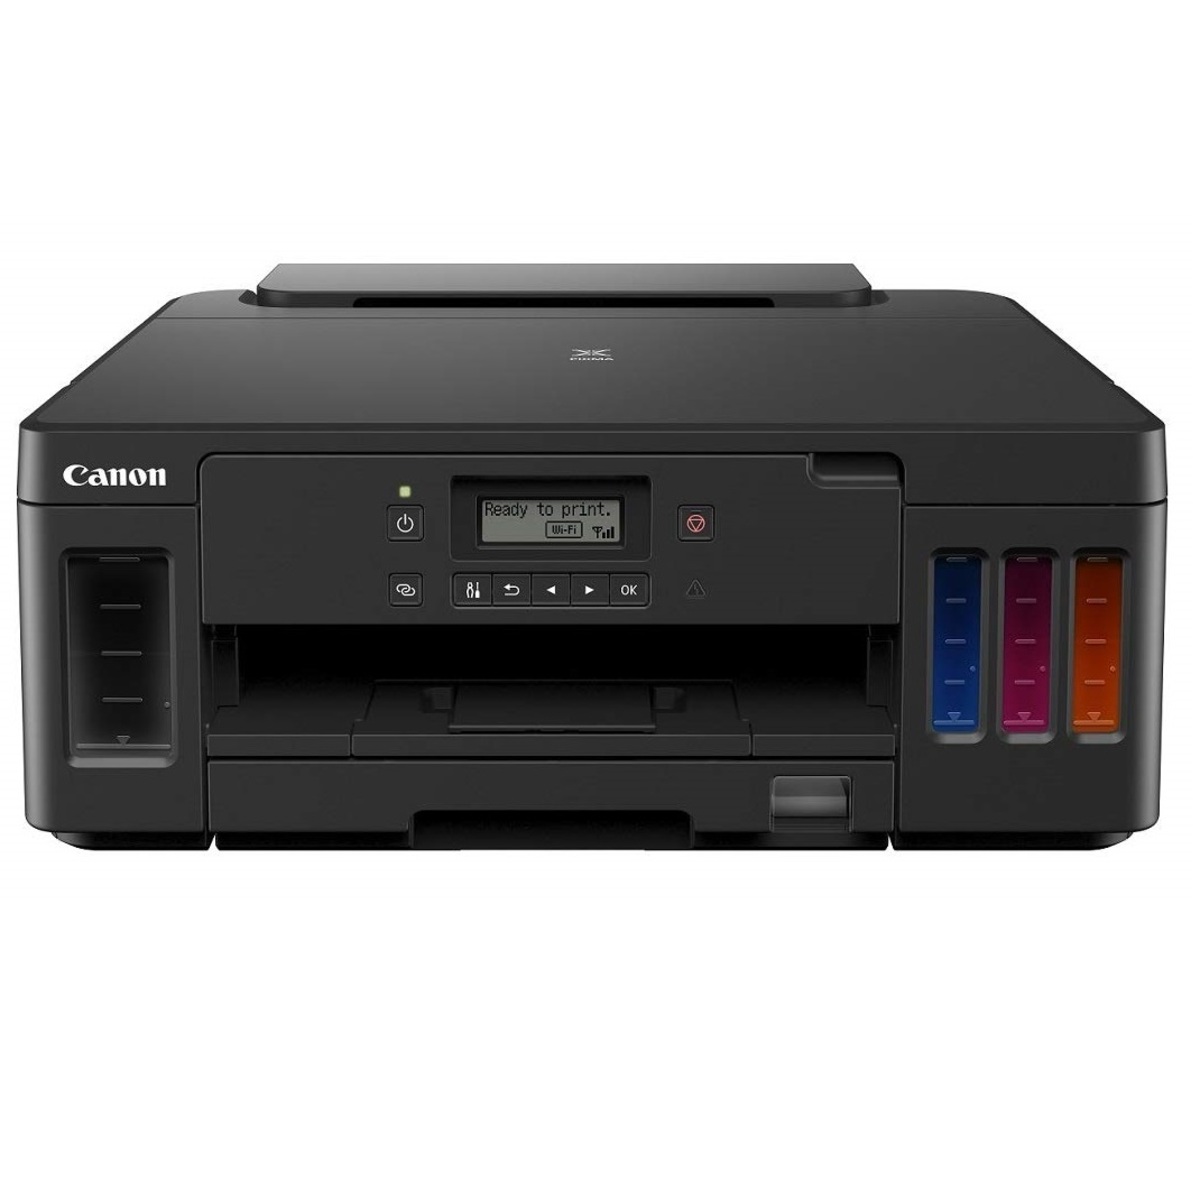 Canon Ink Tank Printer G5070